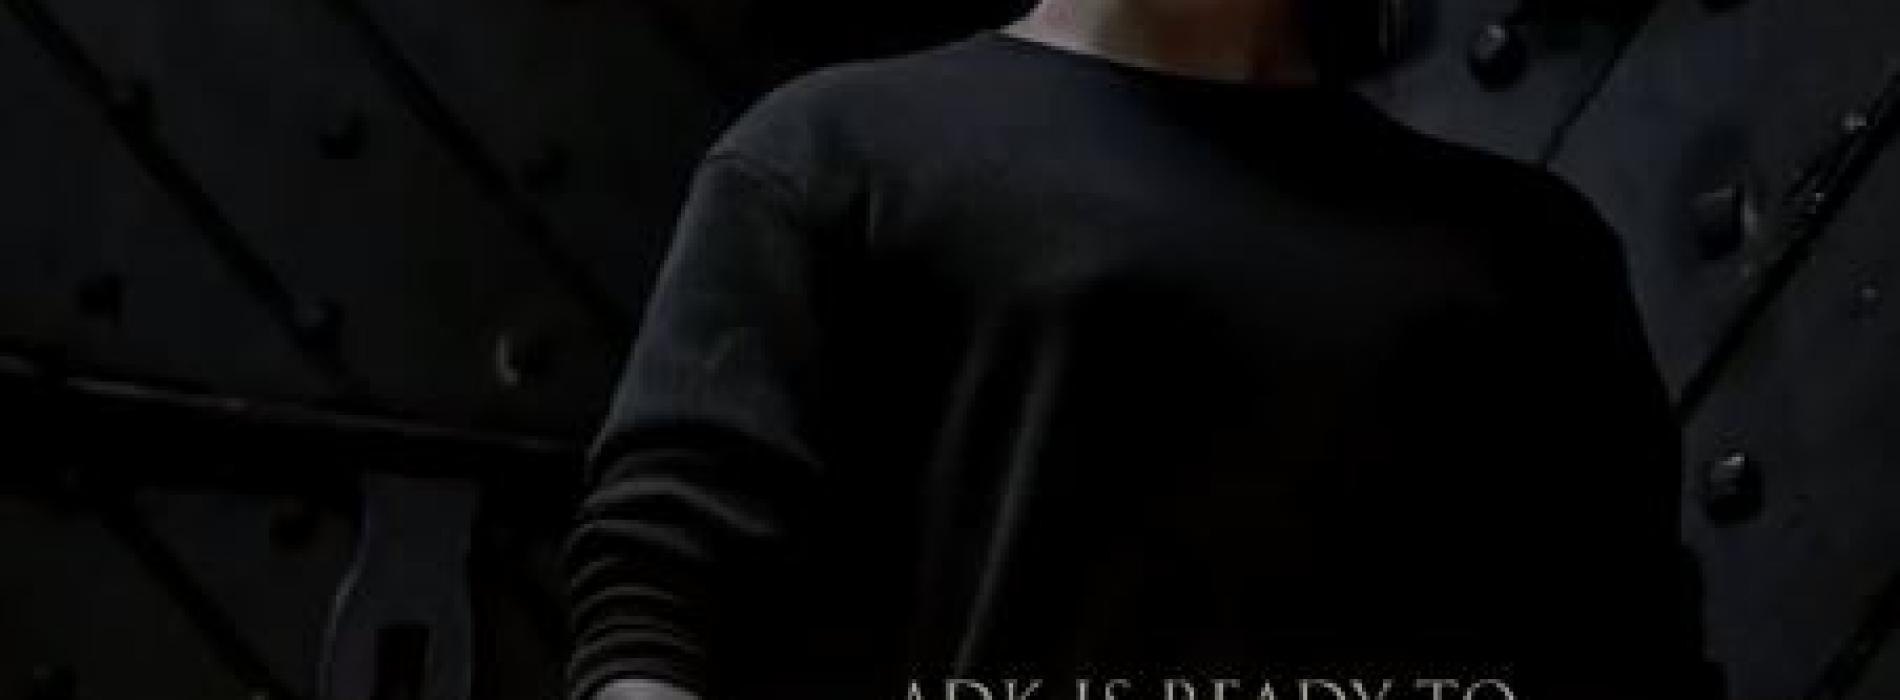 New Music : ADK – Roar | Original Motion Picture Soundtrack